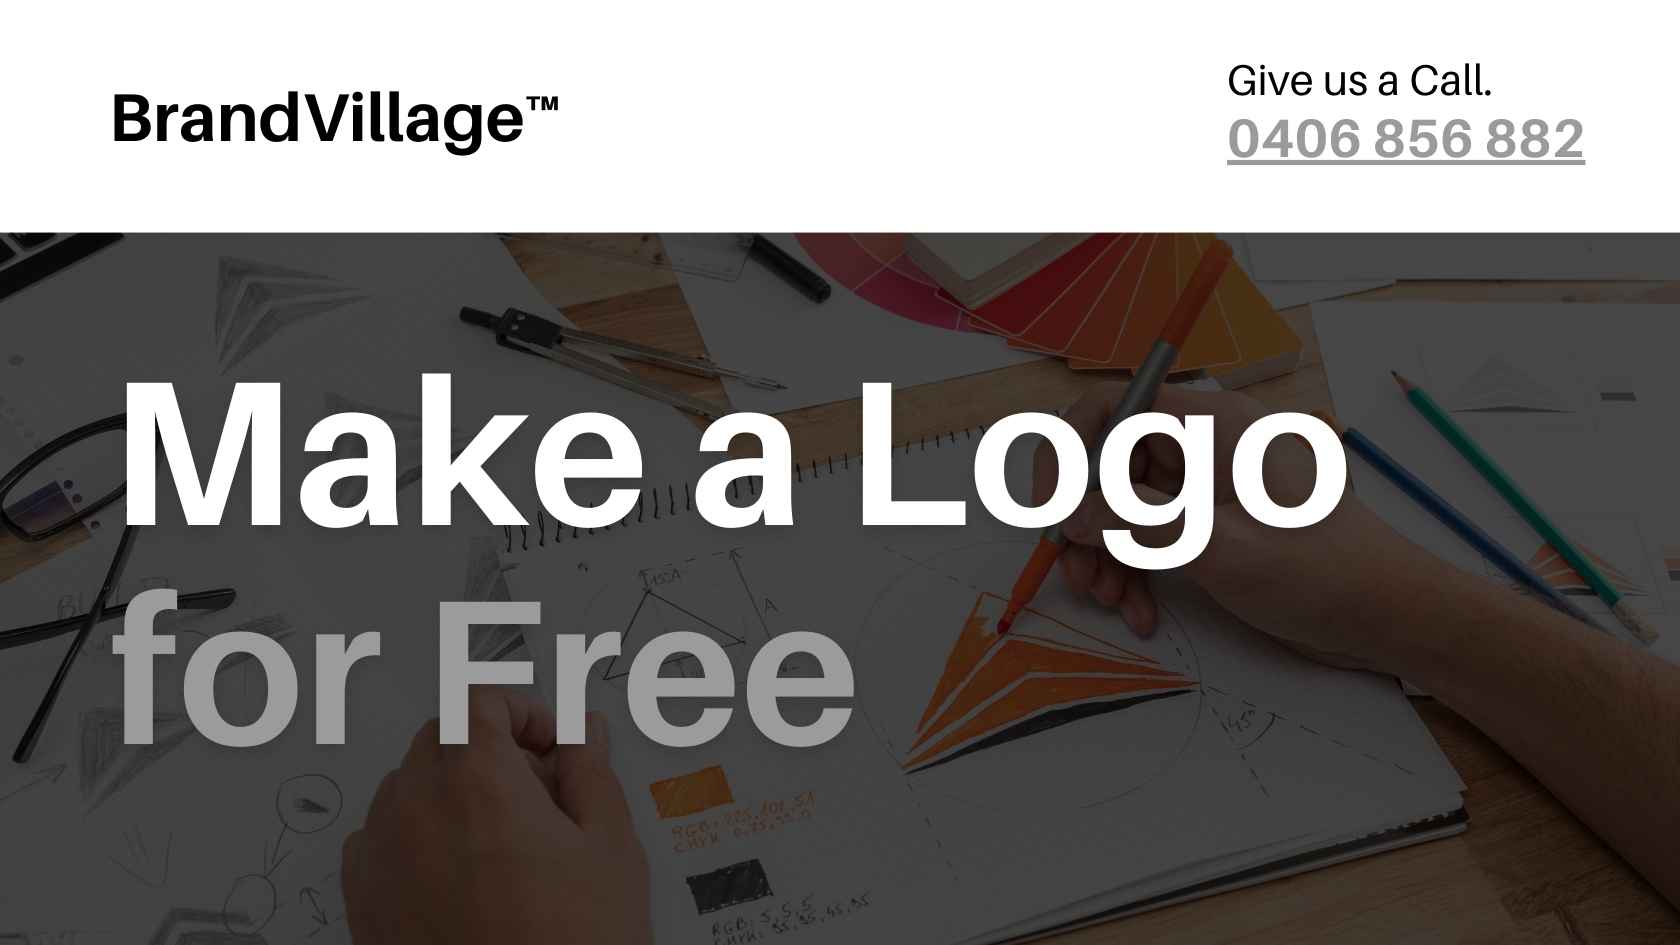 Make a logo for free